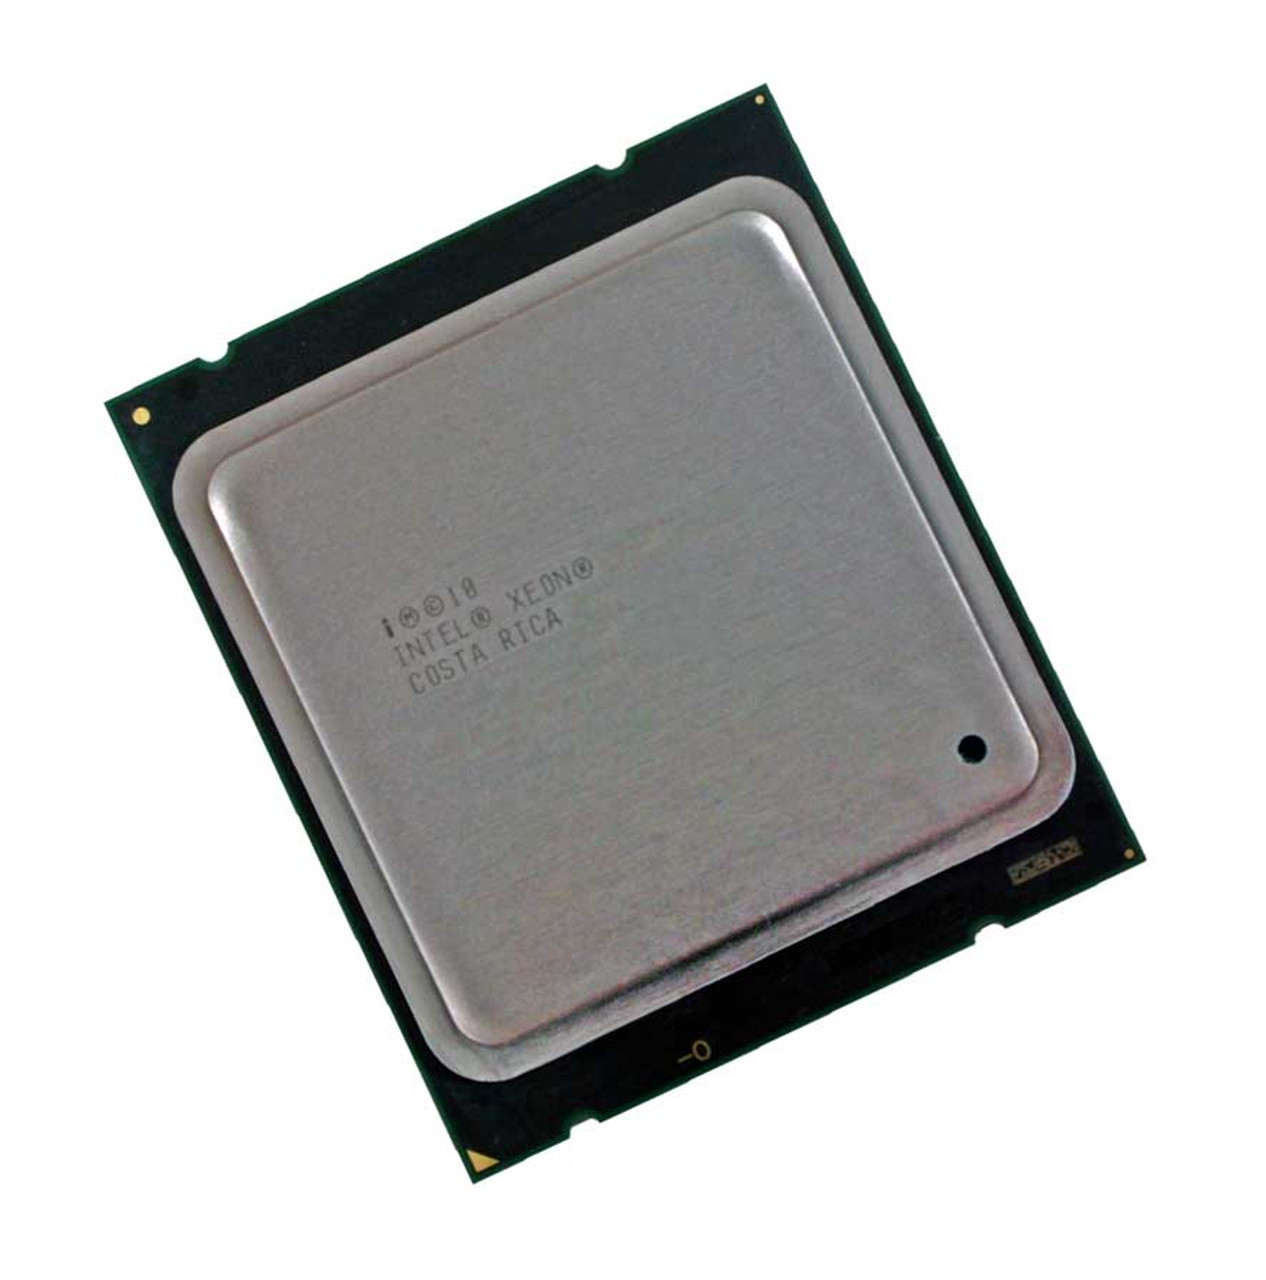 Pair of 2 Intel Xeon E5-2680 2.7 GHz 8-Core SR0KH Processor LGA2011 C2 CPU 